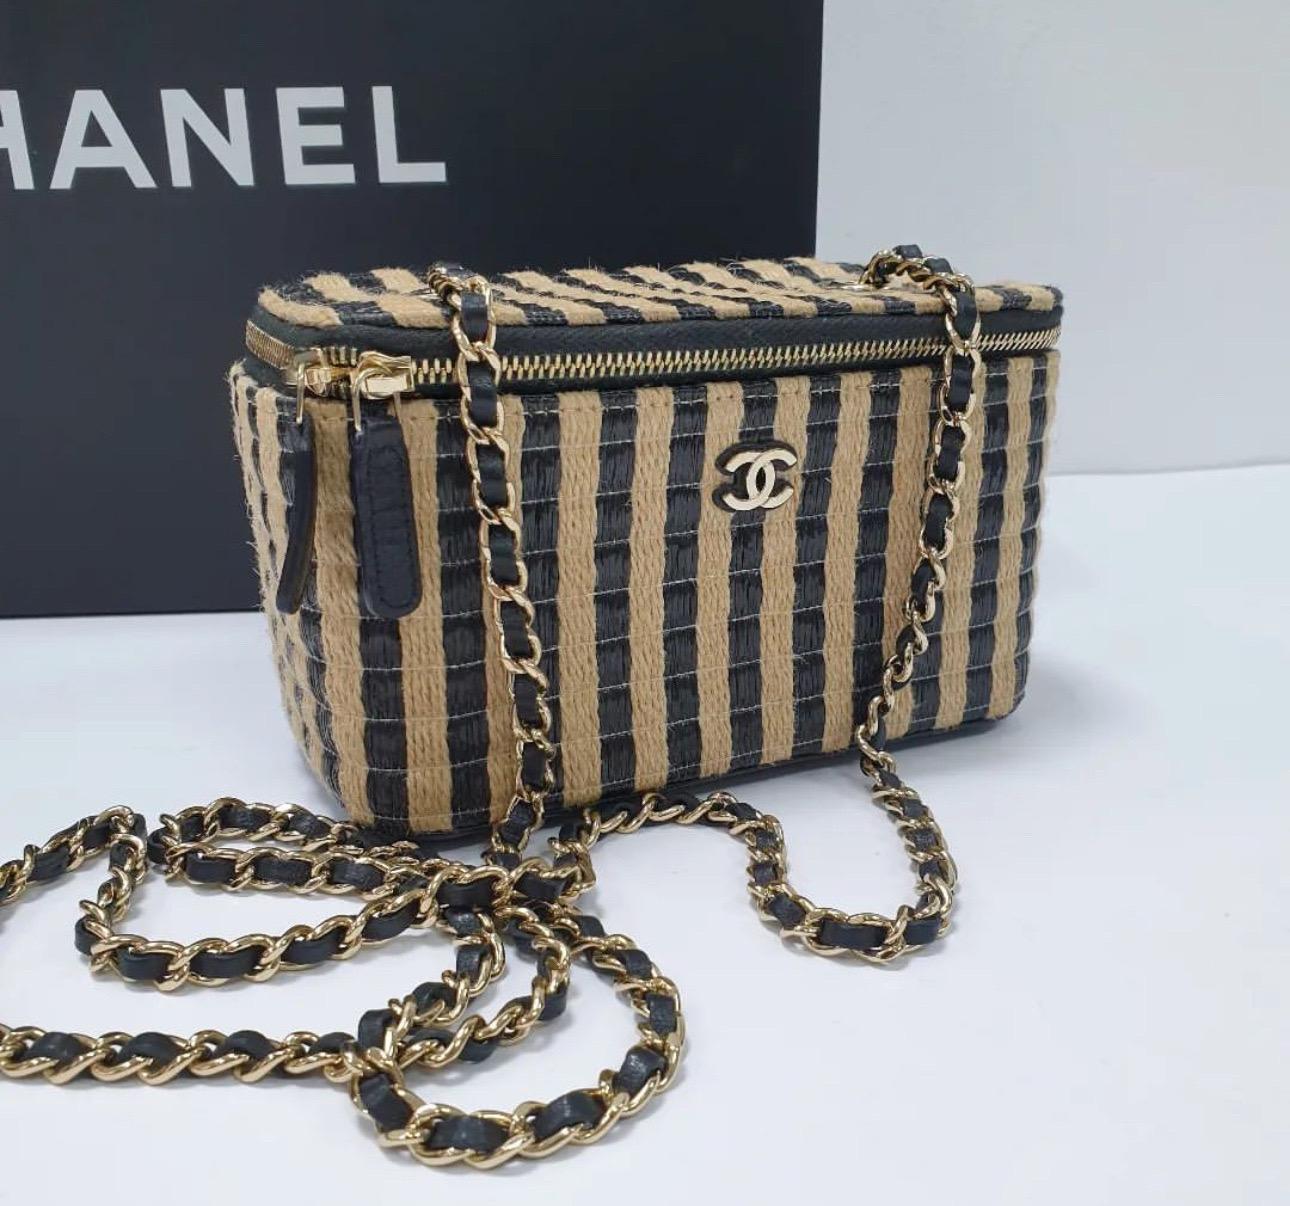 Chanel Vanity Chain Raffia Jute Thread Black Beige Bag In Good Condition For Sale In Krakow, PL